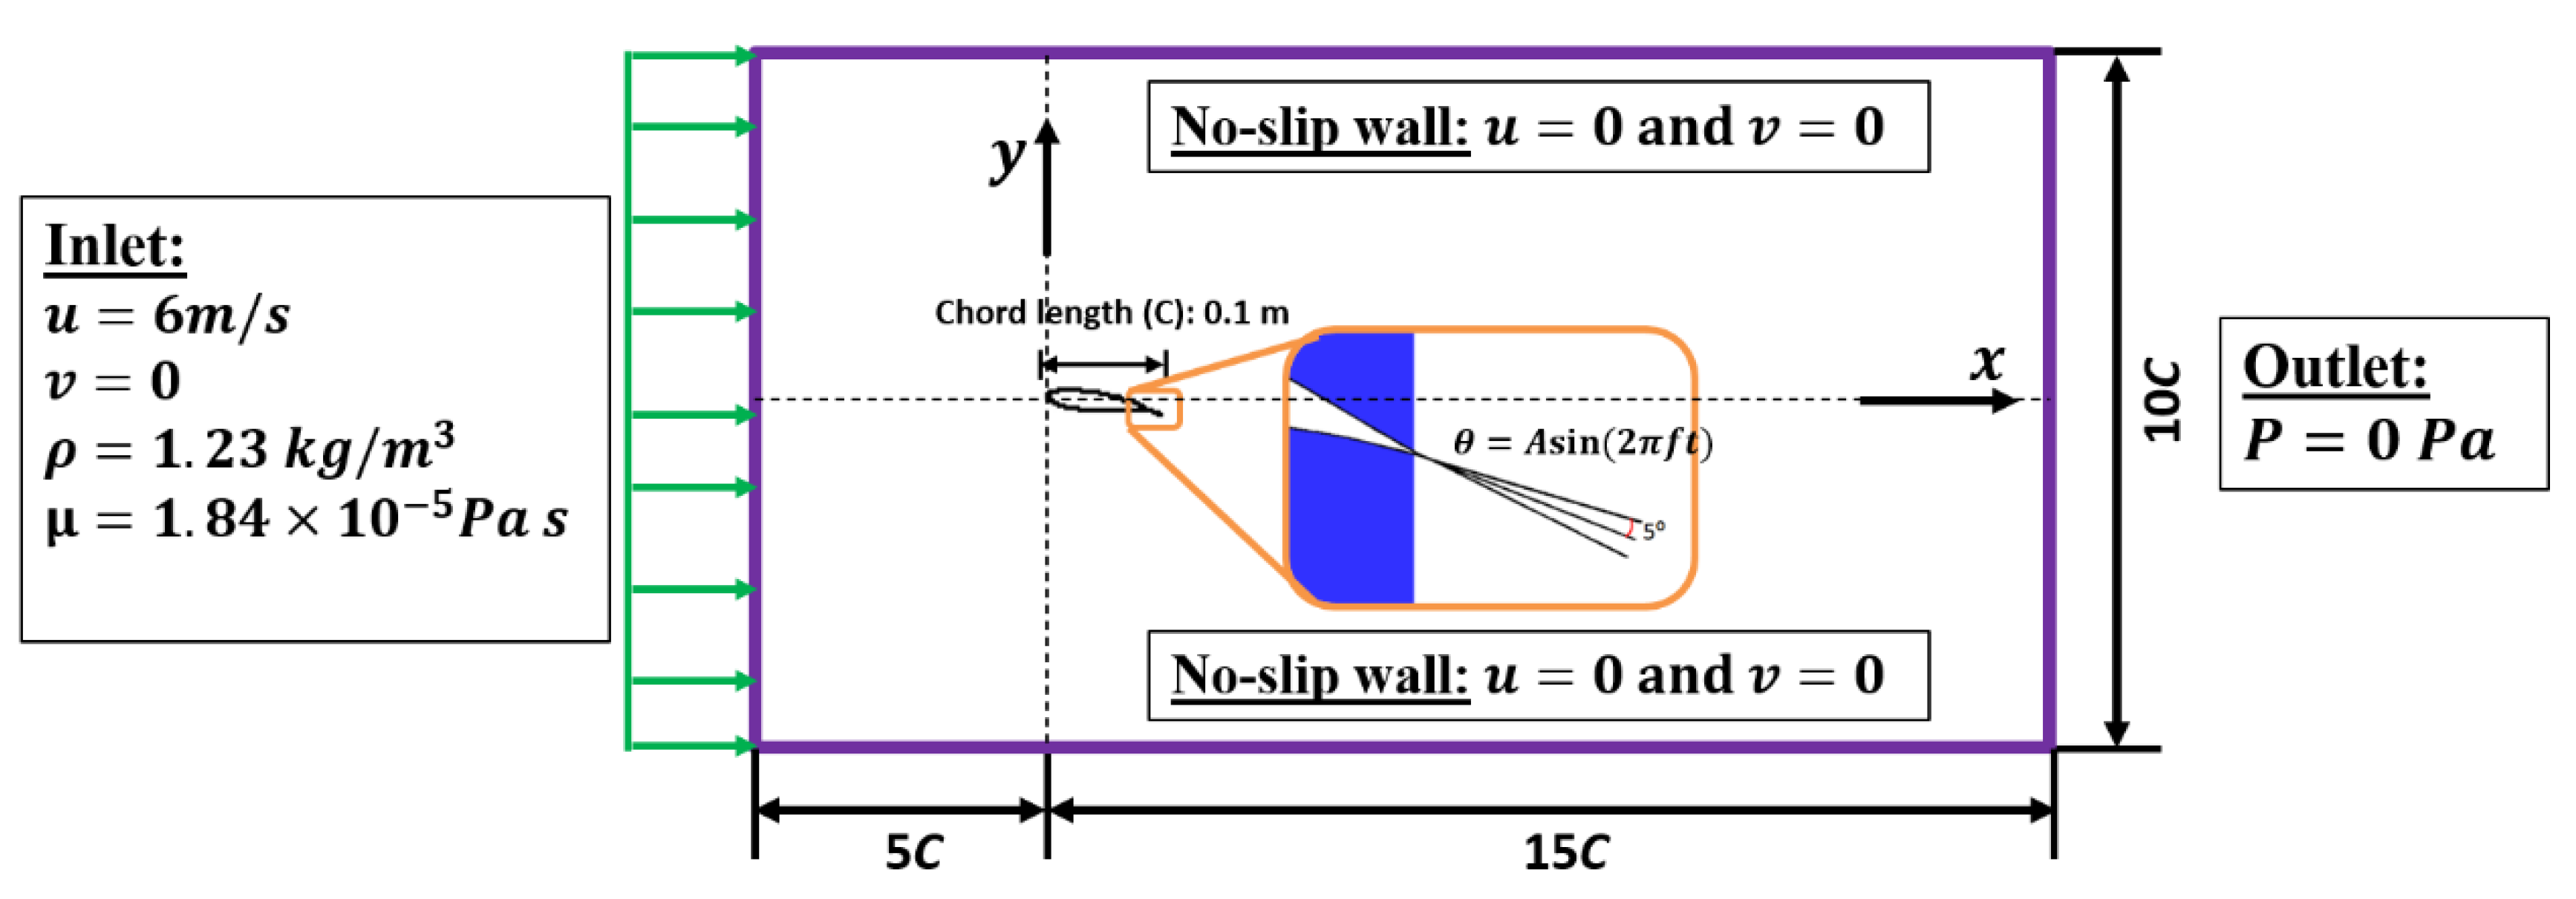 chord length airfoil